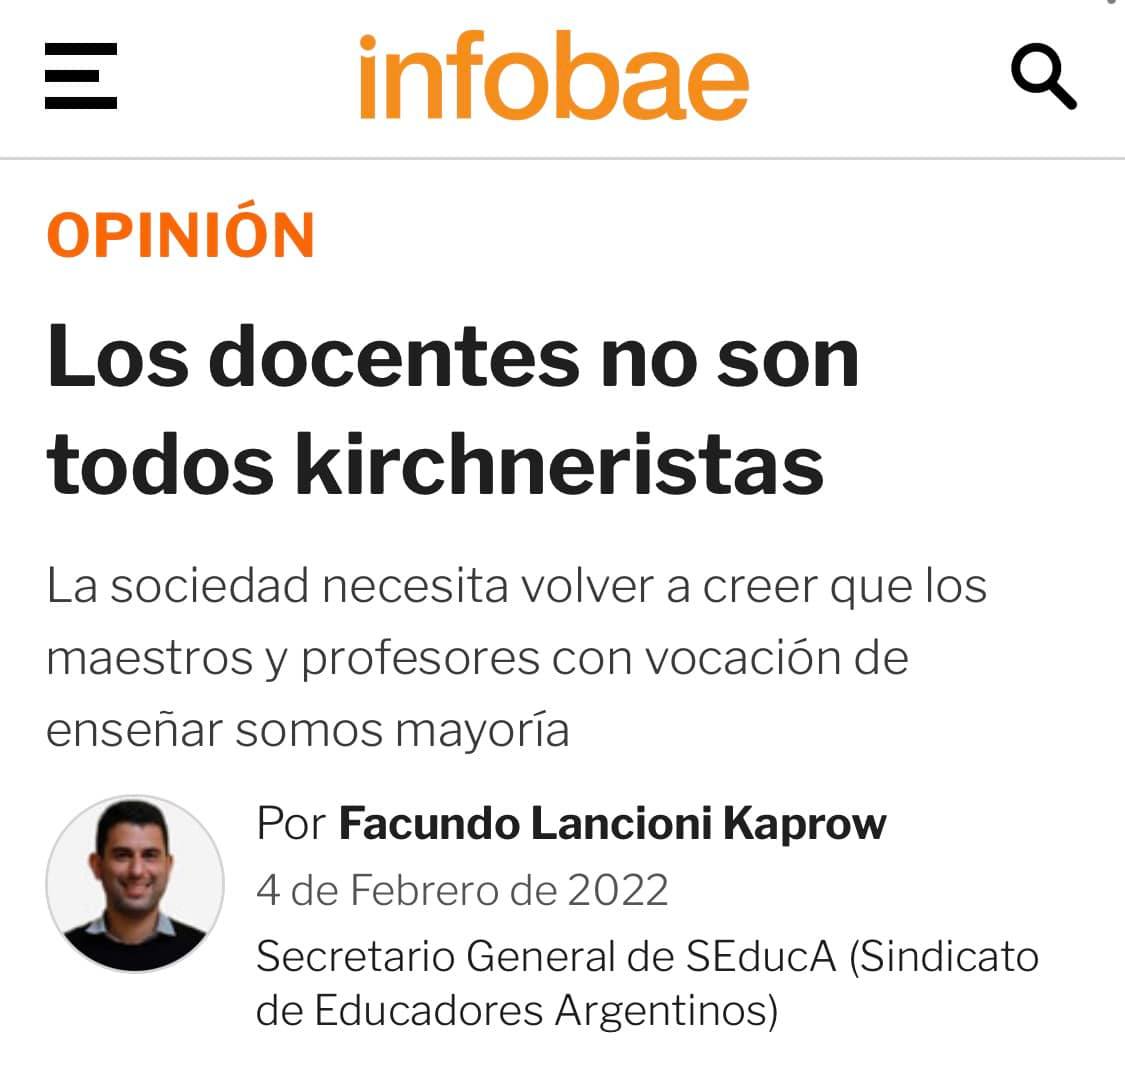 Facundo Lancioni Kaprow_infobae los docentes no son kircheristas